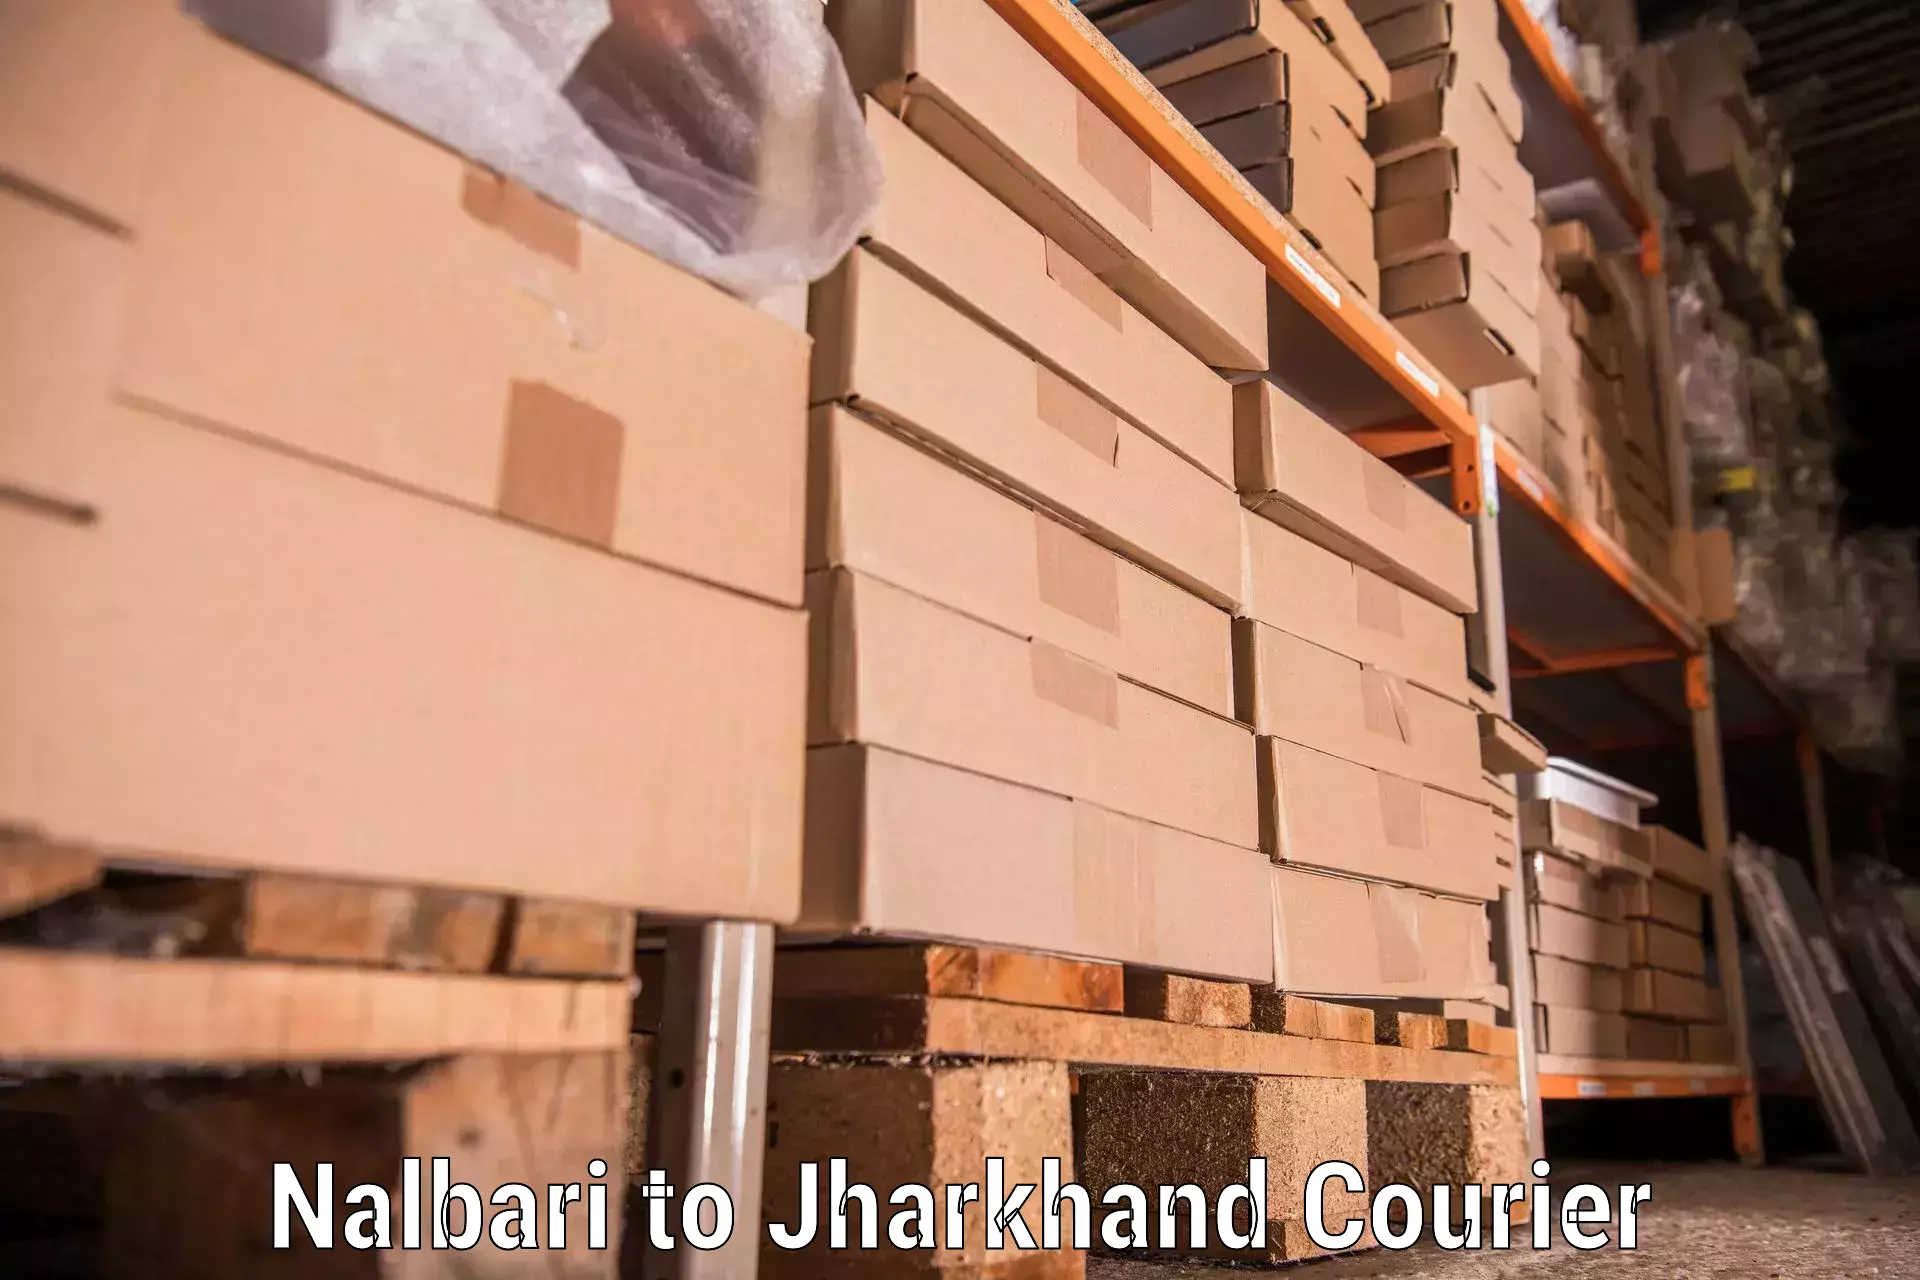 Furniture moving services in Nalbari to Rangalia